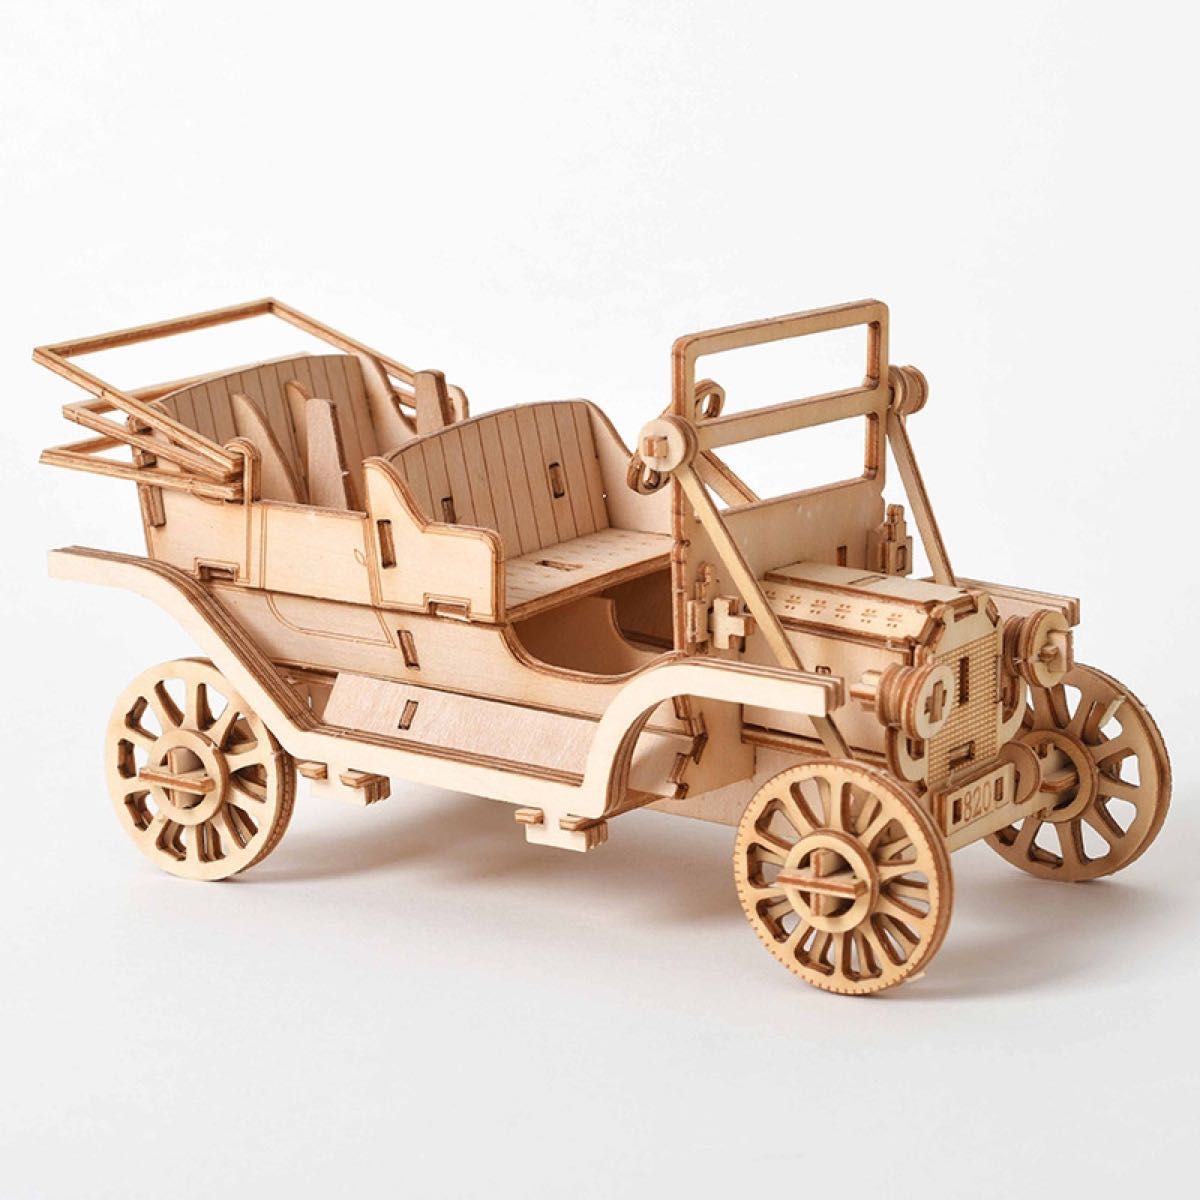 DIY 3D 模型組立 ウッドクラフトキット クラシックカー 自由研究 夏休み 小学生 中学生 工作 木製立体パズル 組立キット